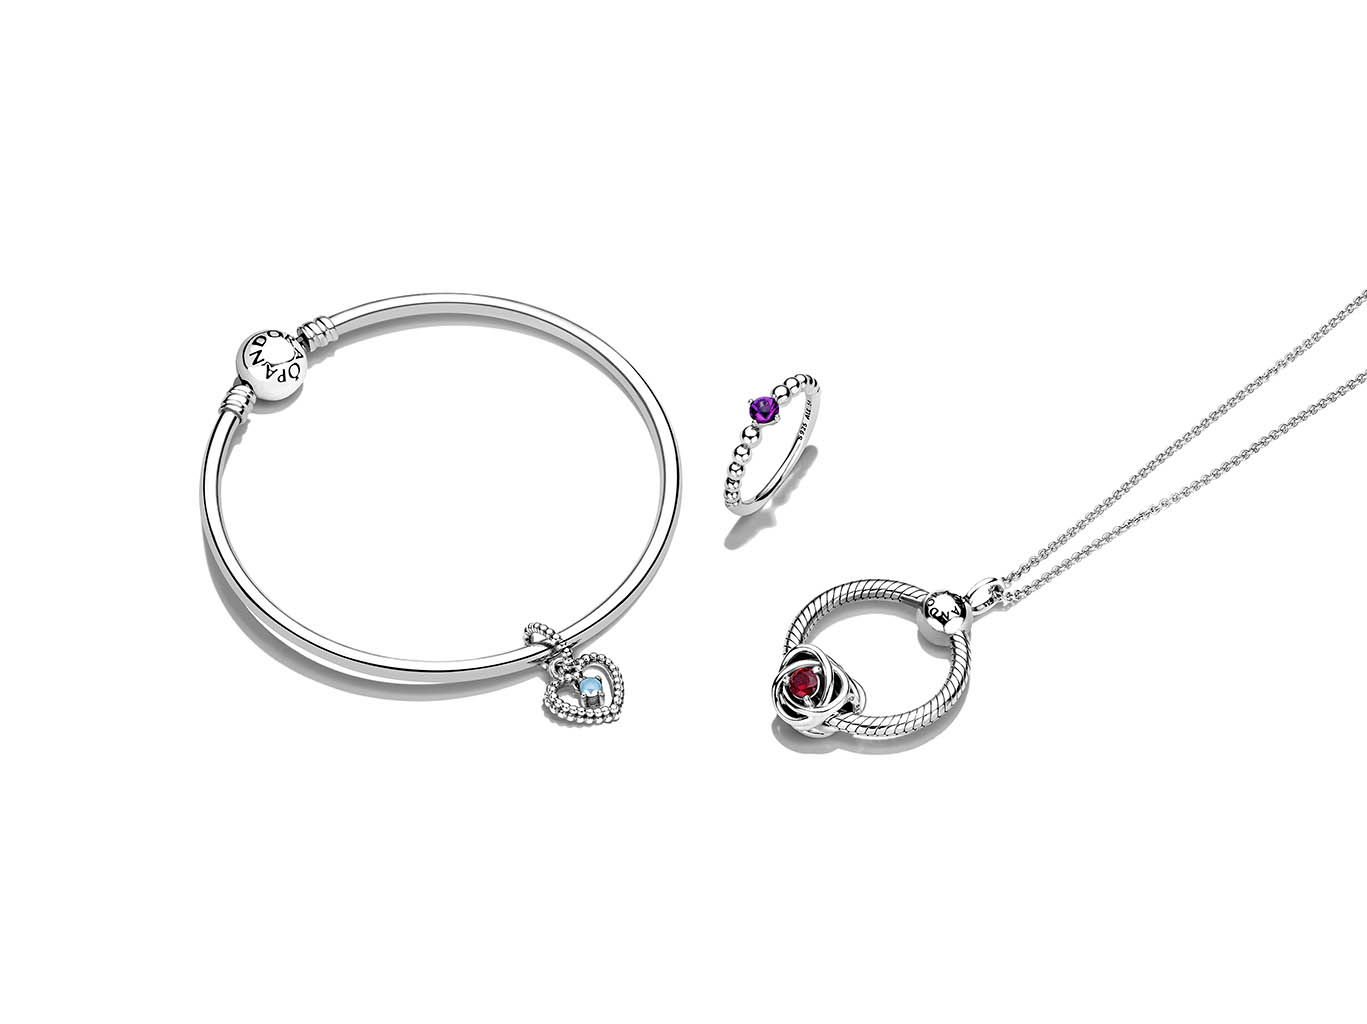 Packshot Factory - Rings - Pandora jewellery bracelet ring and necklace set